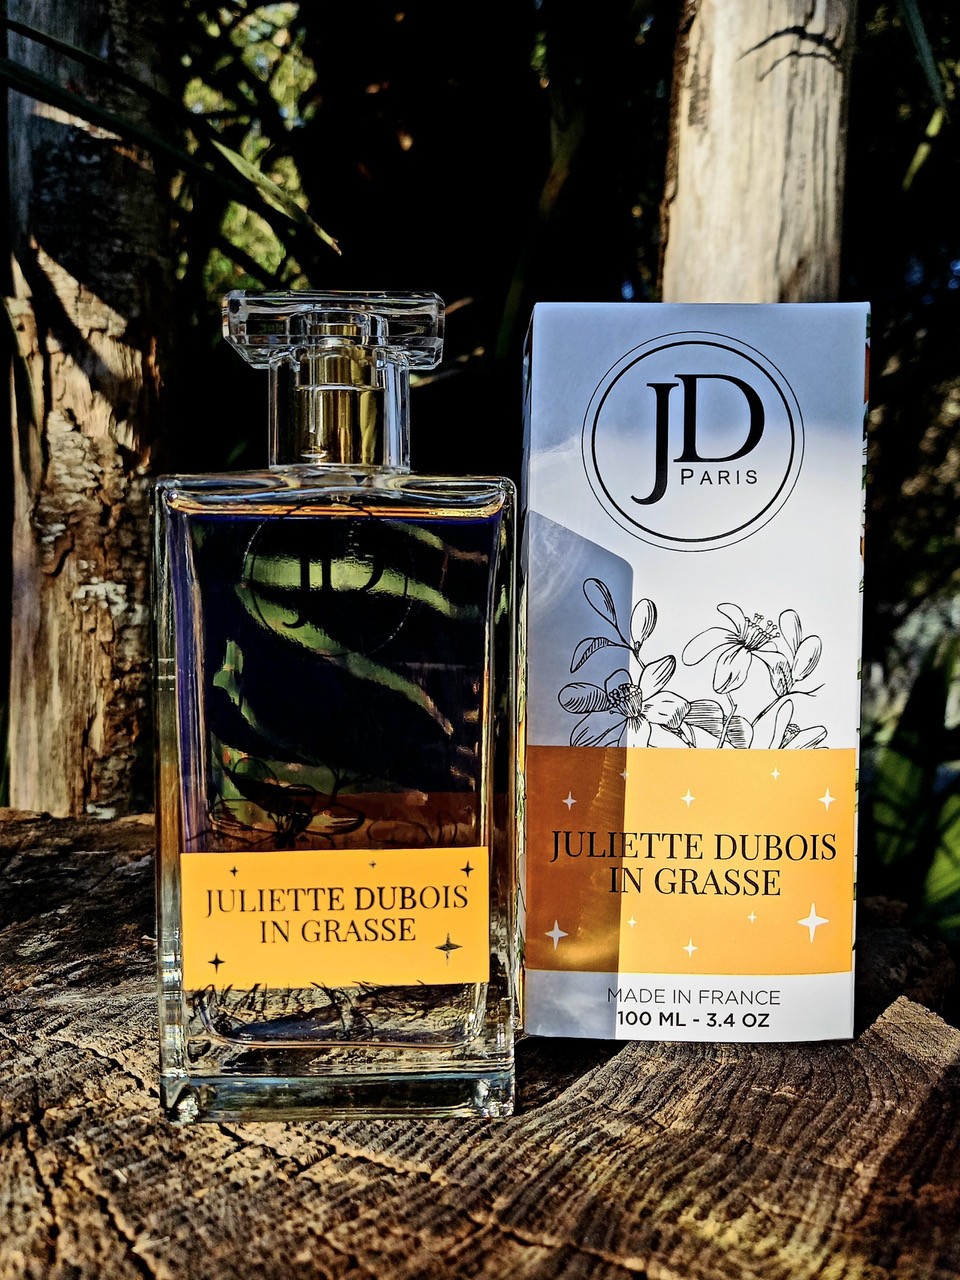 Juliette Dubois in Grasse by JD Paris - 100 ml